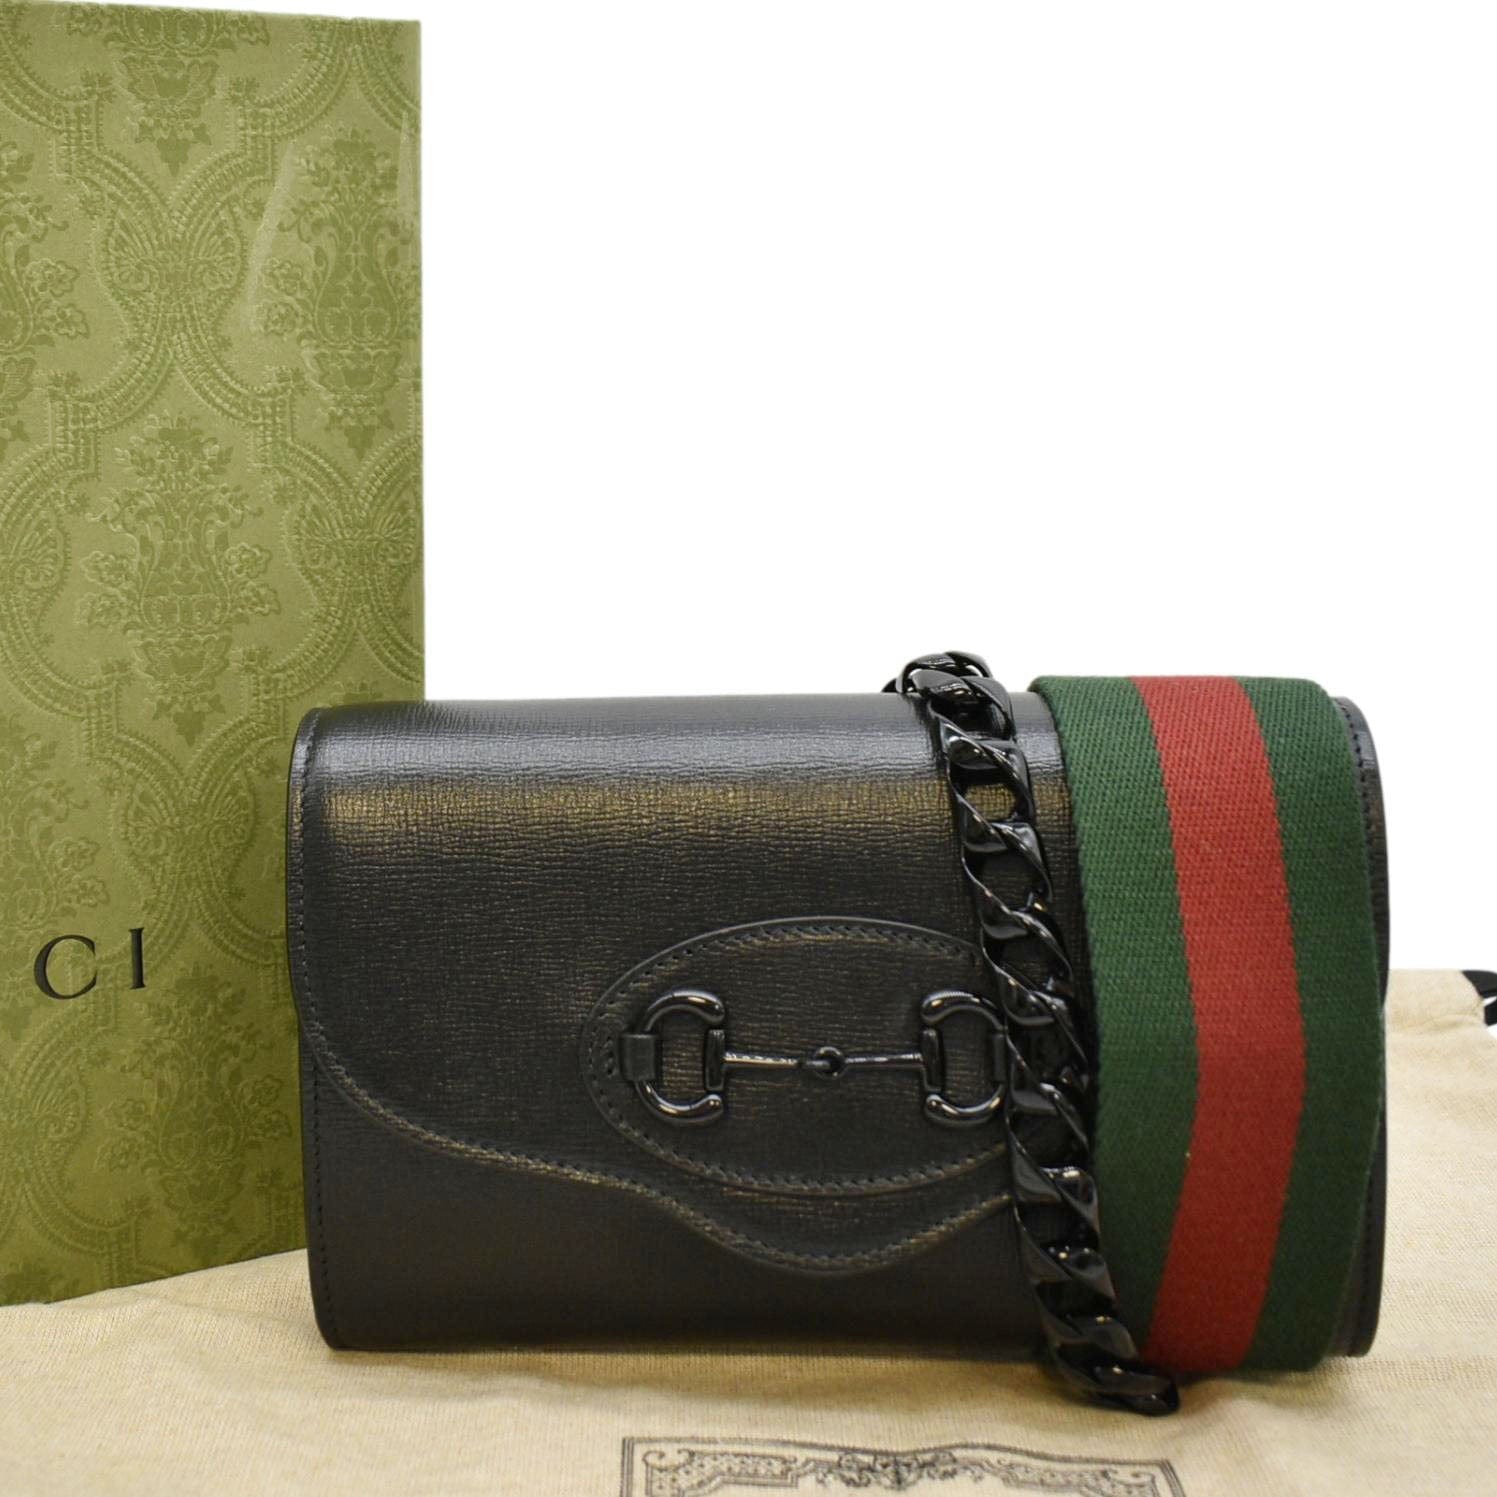 Gucci Limited Edition Tom Ford Horsebit Clutch, Gucci Handbags